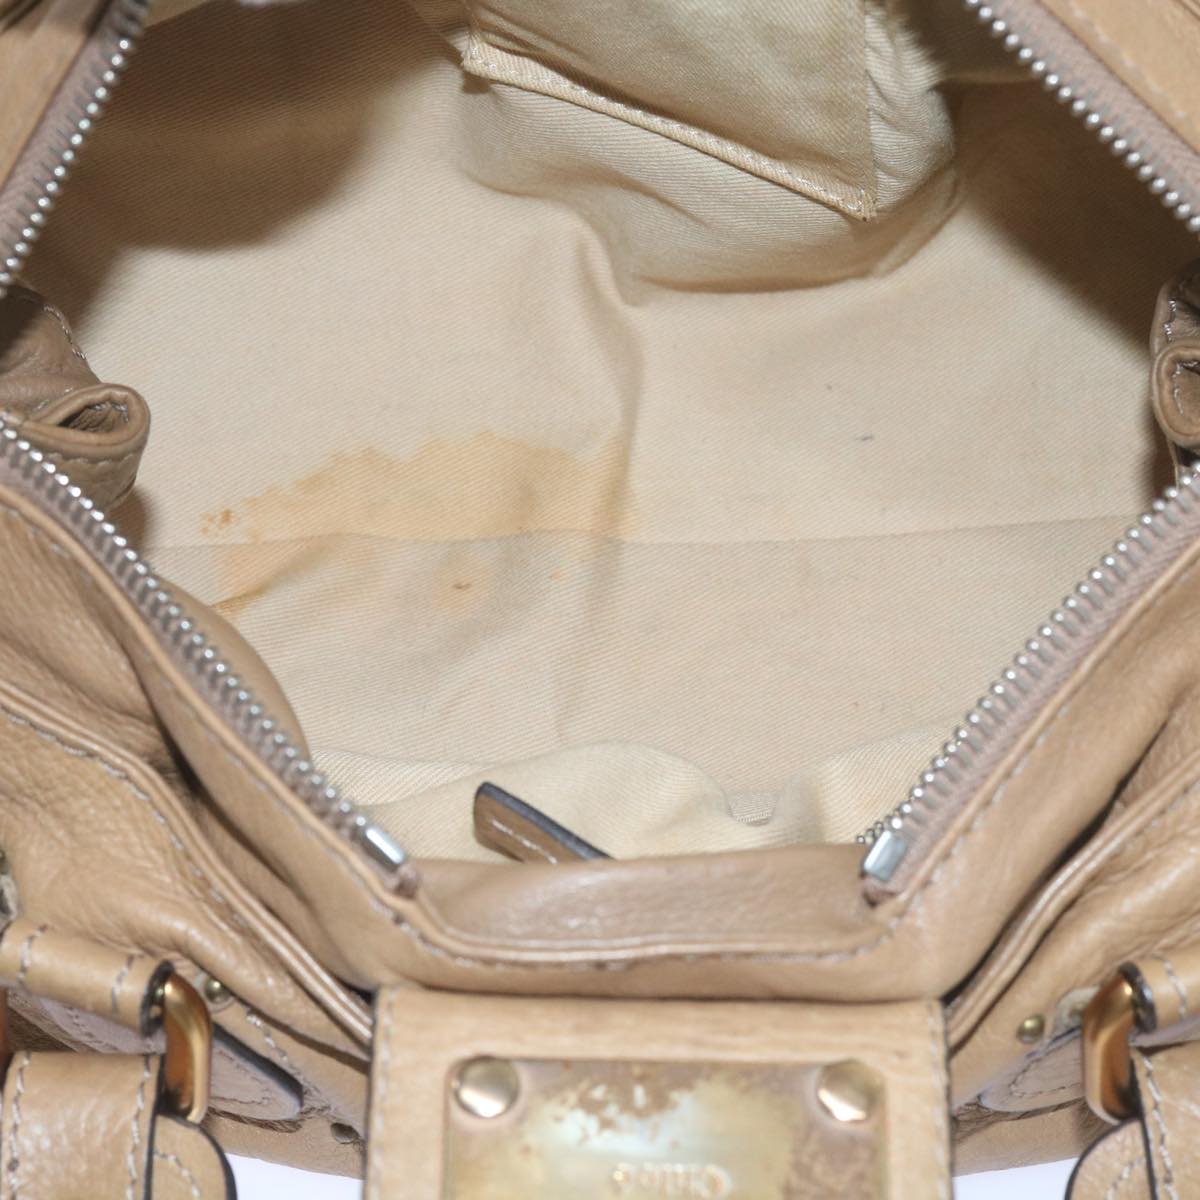 Chloe Paddington Hand Bag Leather Beige Auth 60548